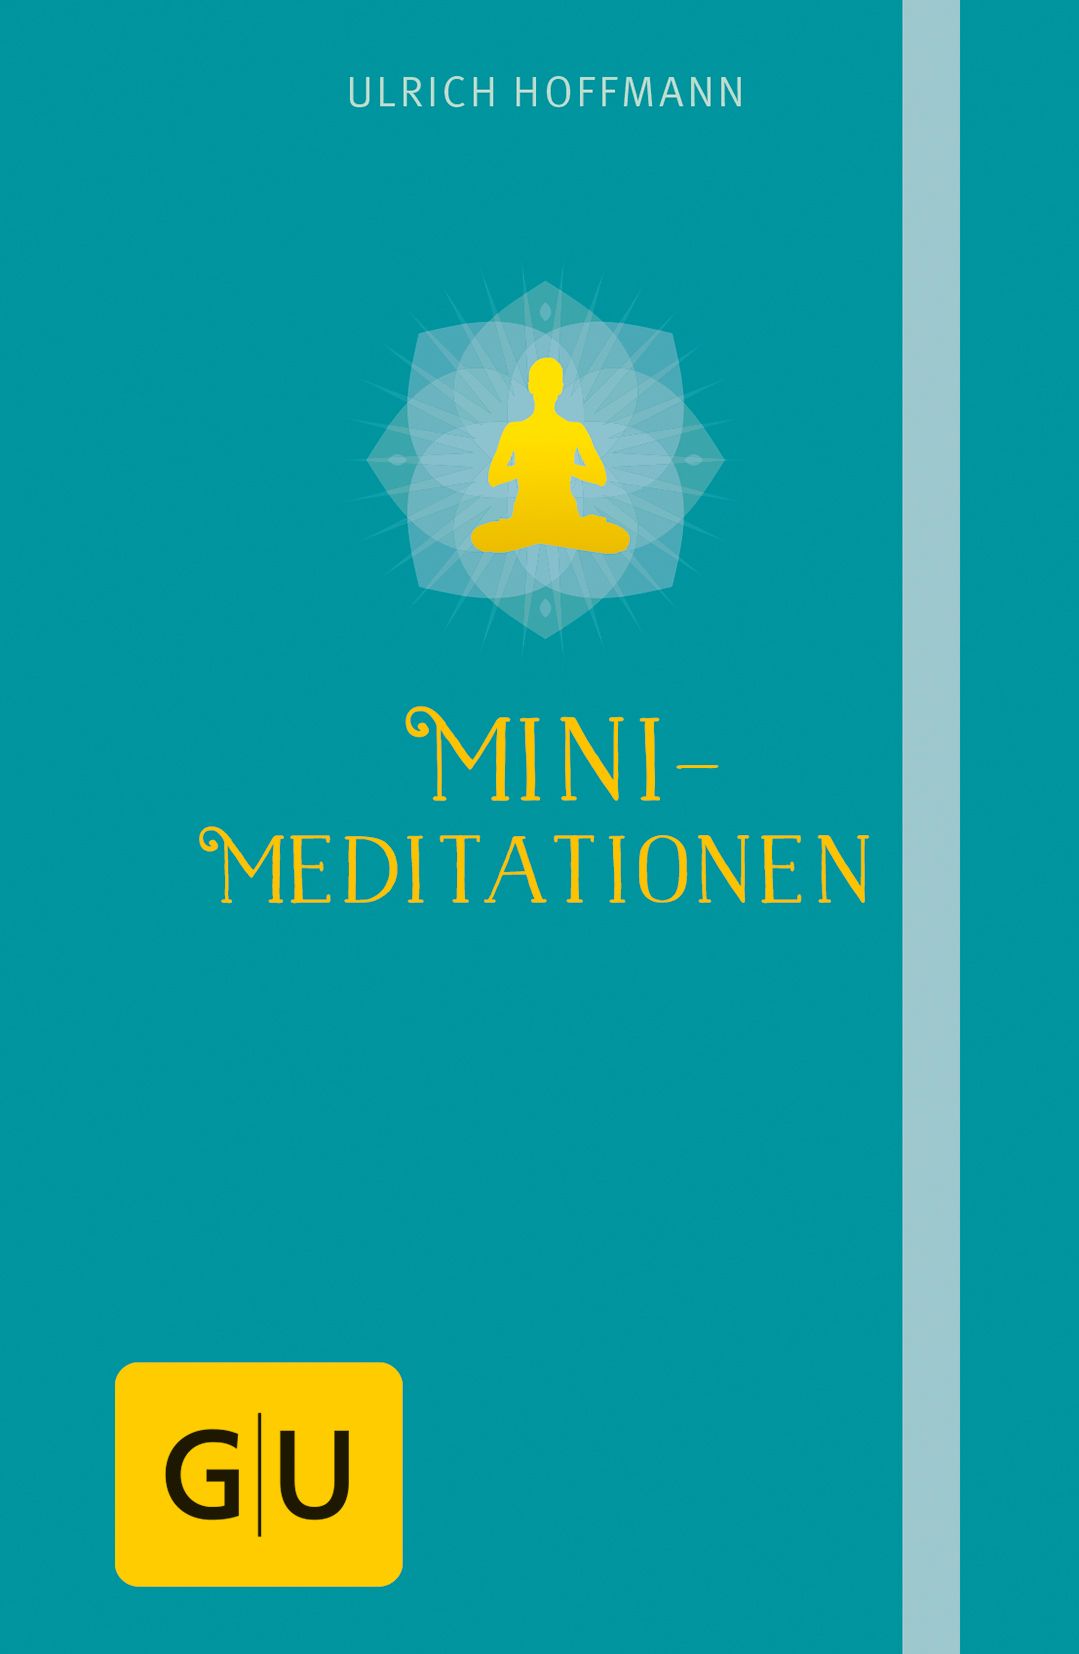 GU Mini-Meditationen